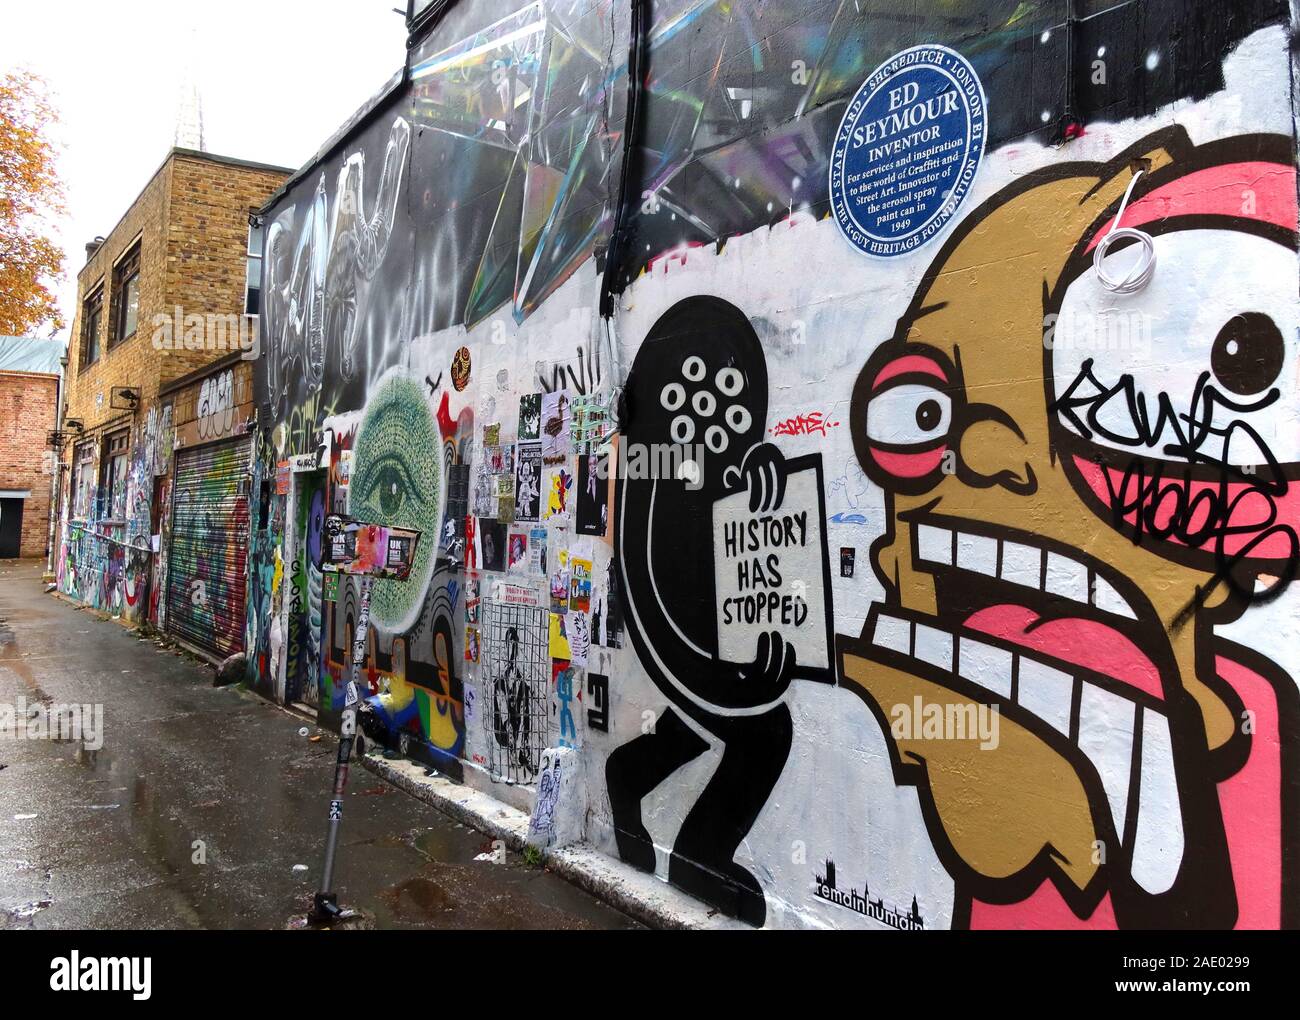 History has Stopped,Ed Seymour,Brick Lane,art and graffiti,Shoreditch,Tower Hamlets,East End,London,South East,England,UK, E1 6QL Stock Photo